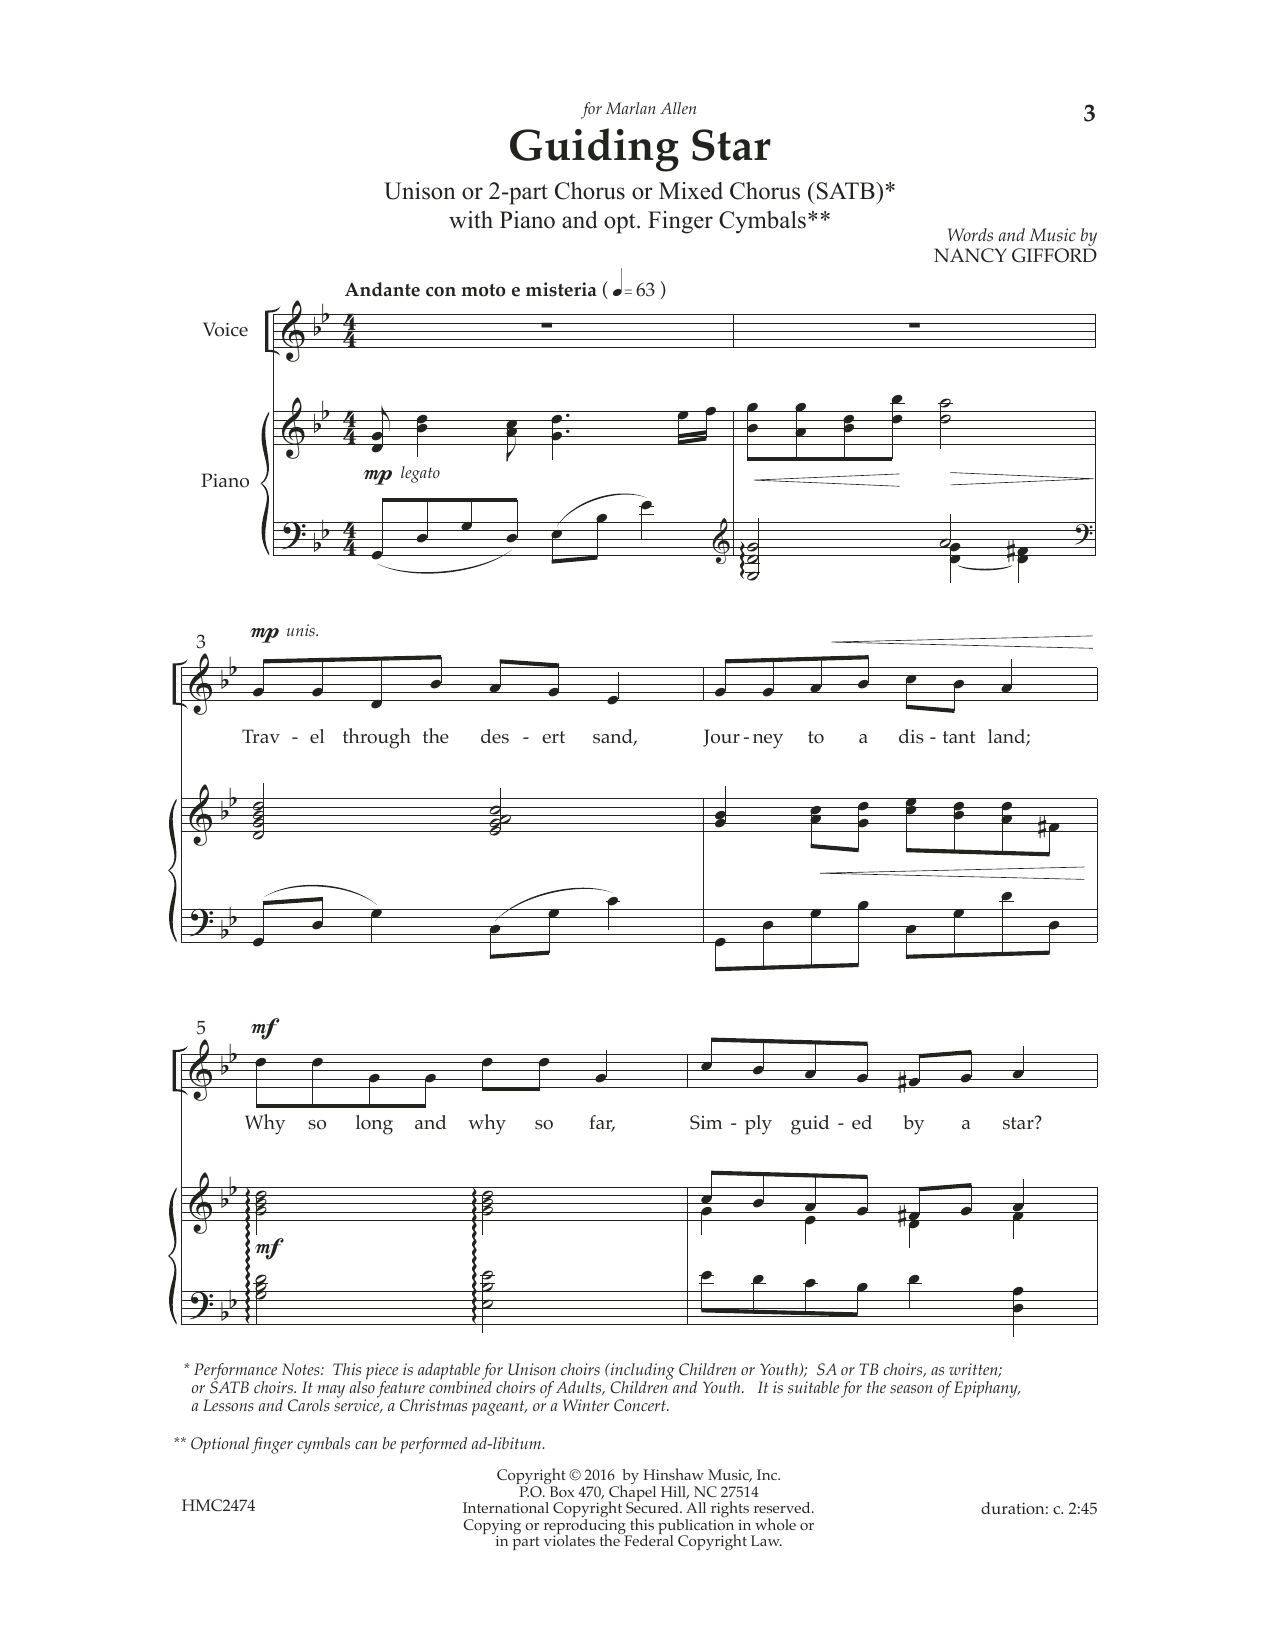 Nancy Gifford Guiding Star Sheet Music Notes & Chords for 2-Part Choir - Download or Print PDF